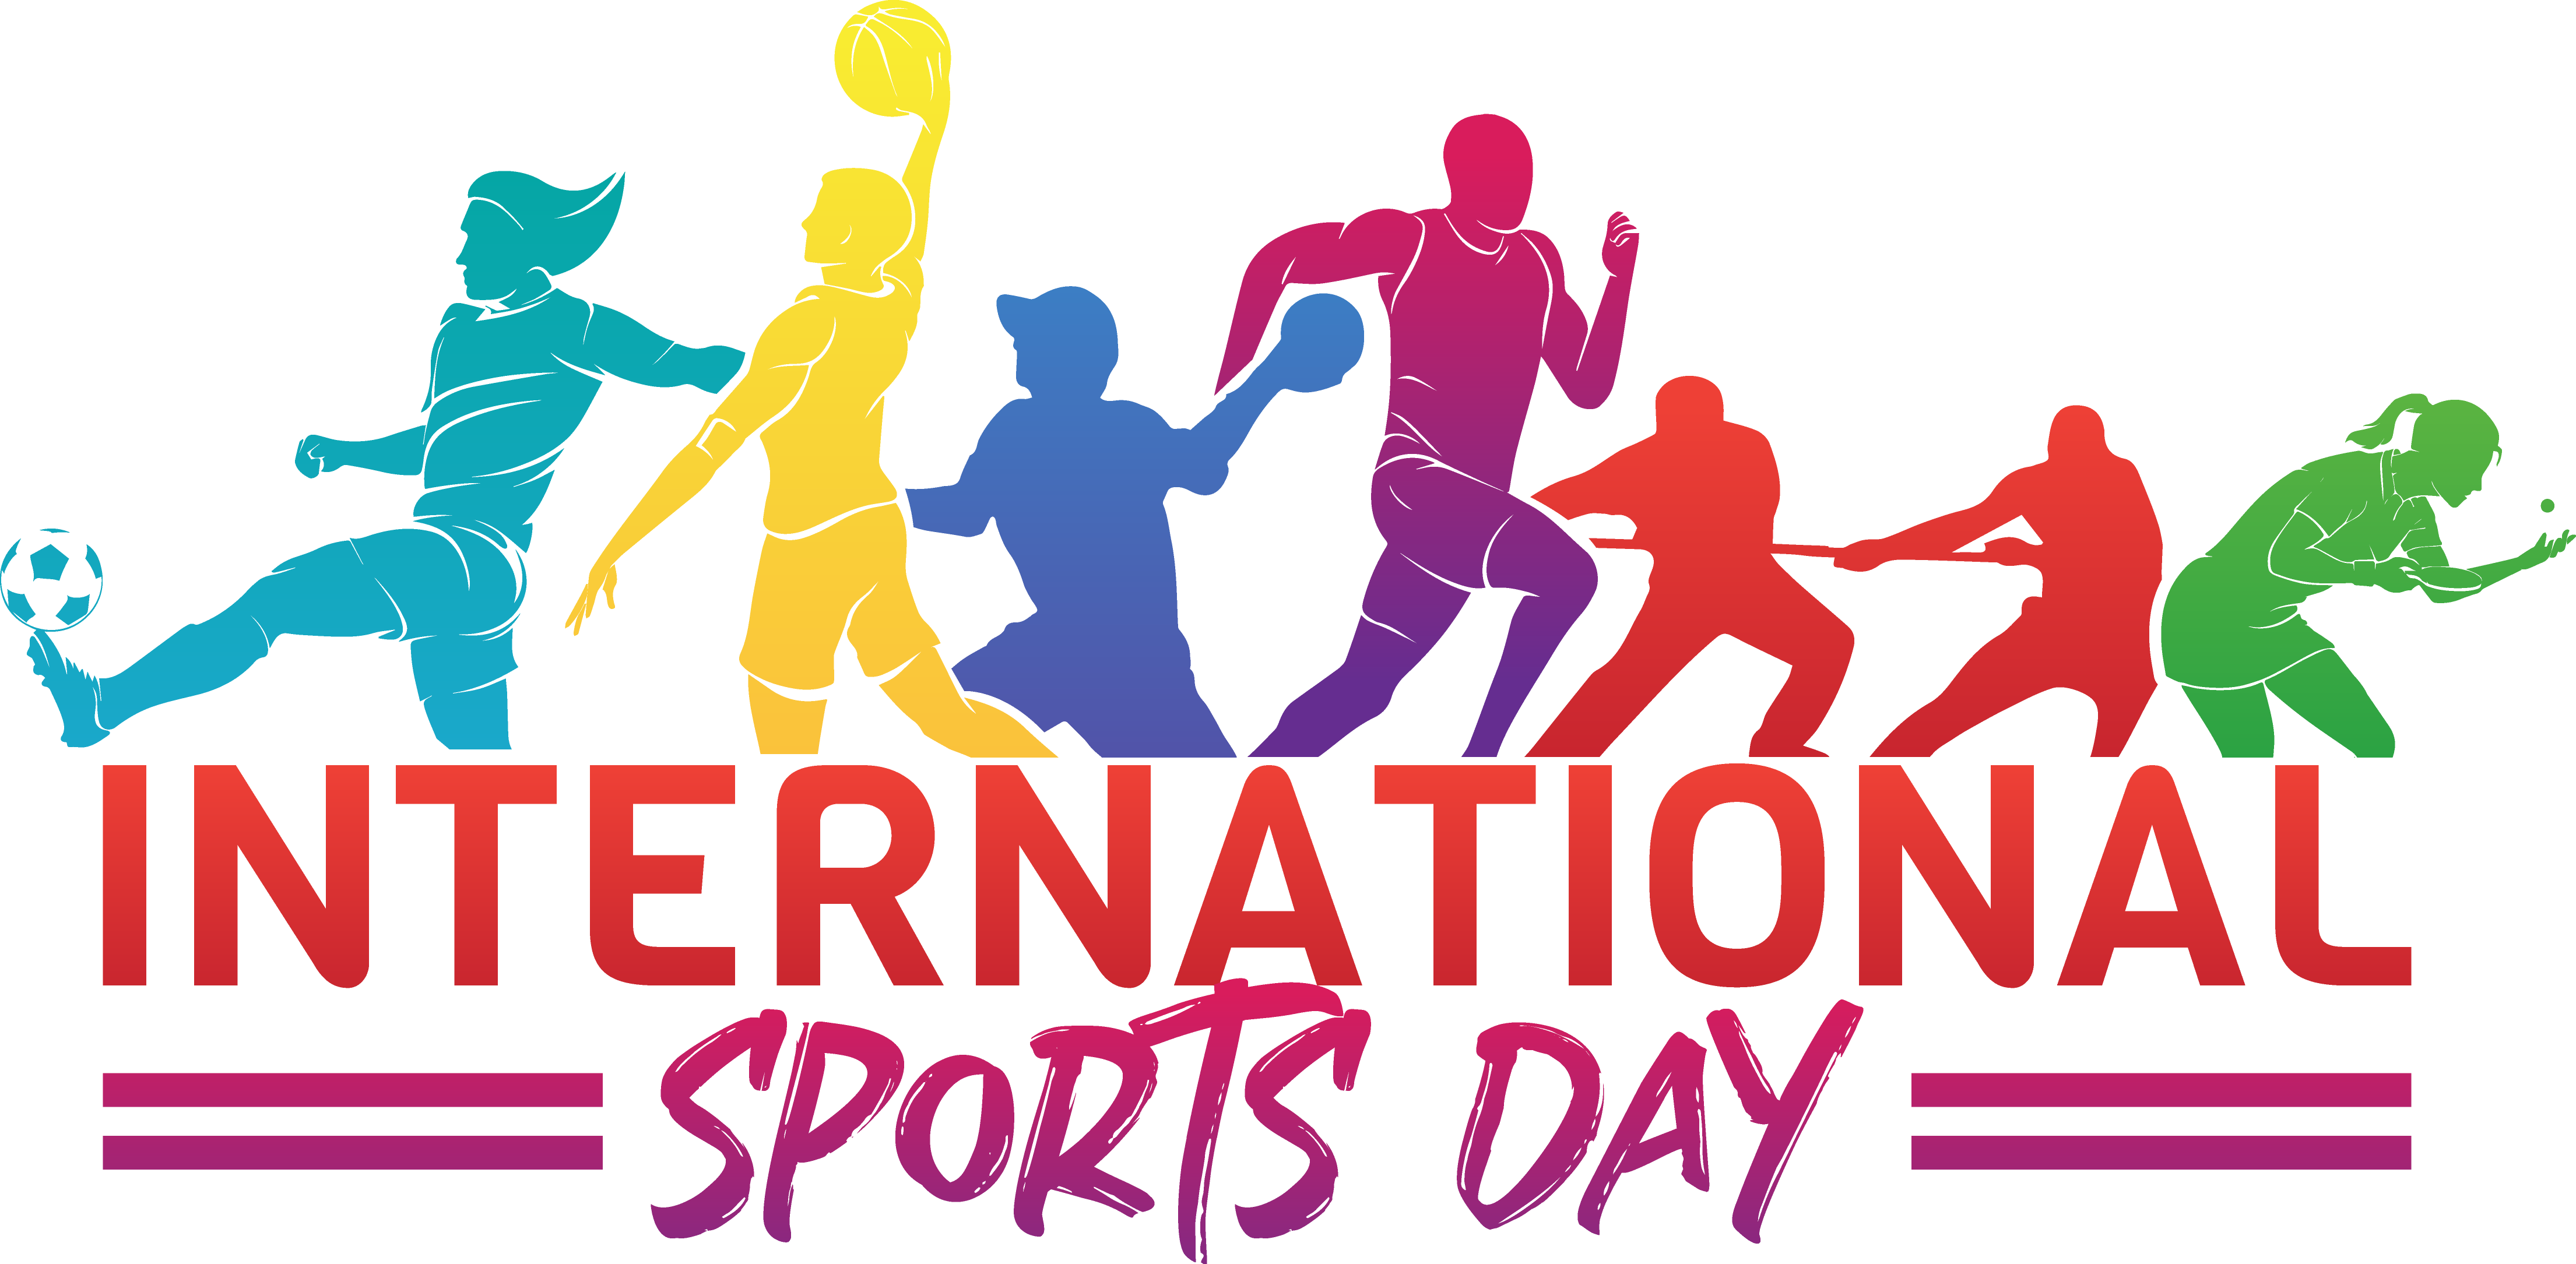 MKU celebrates international day of sports for peace and development